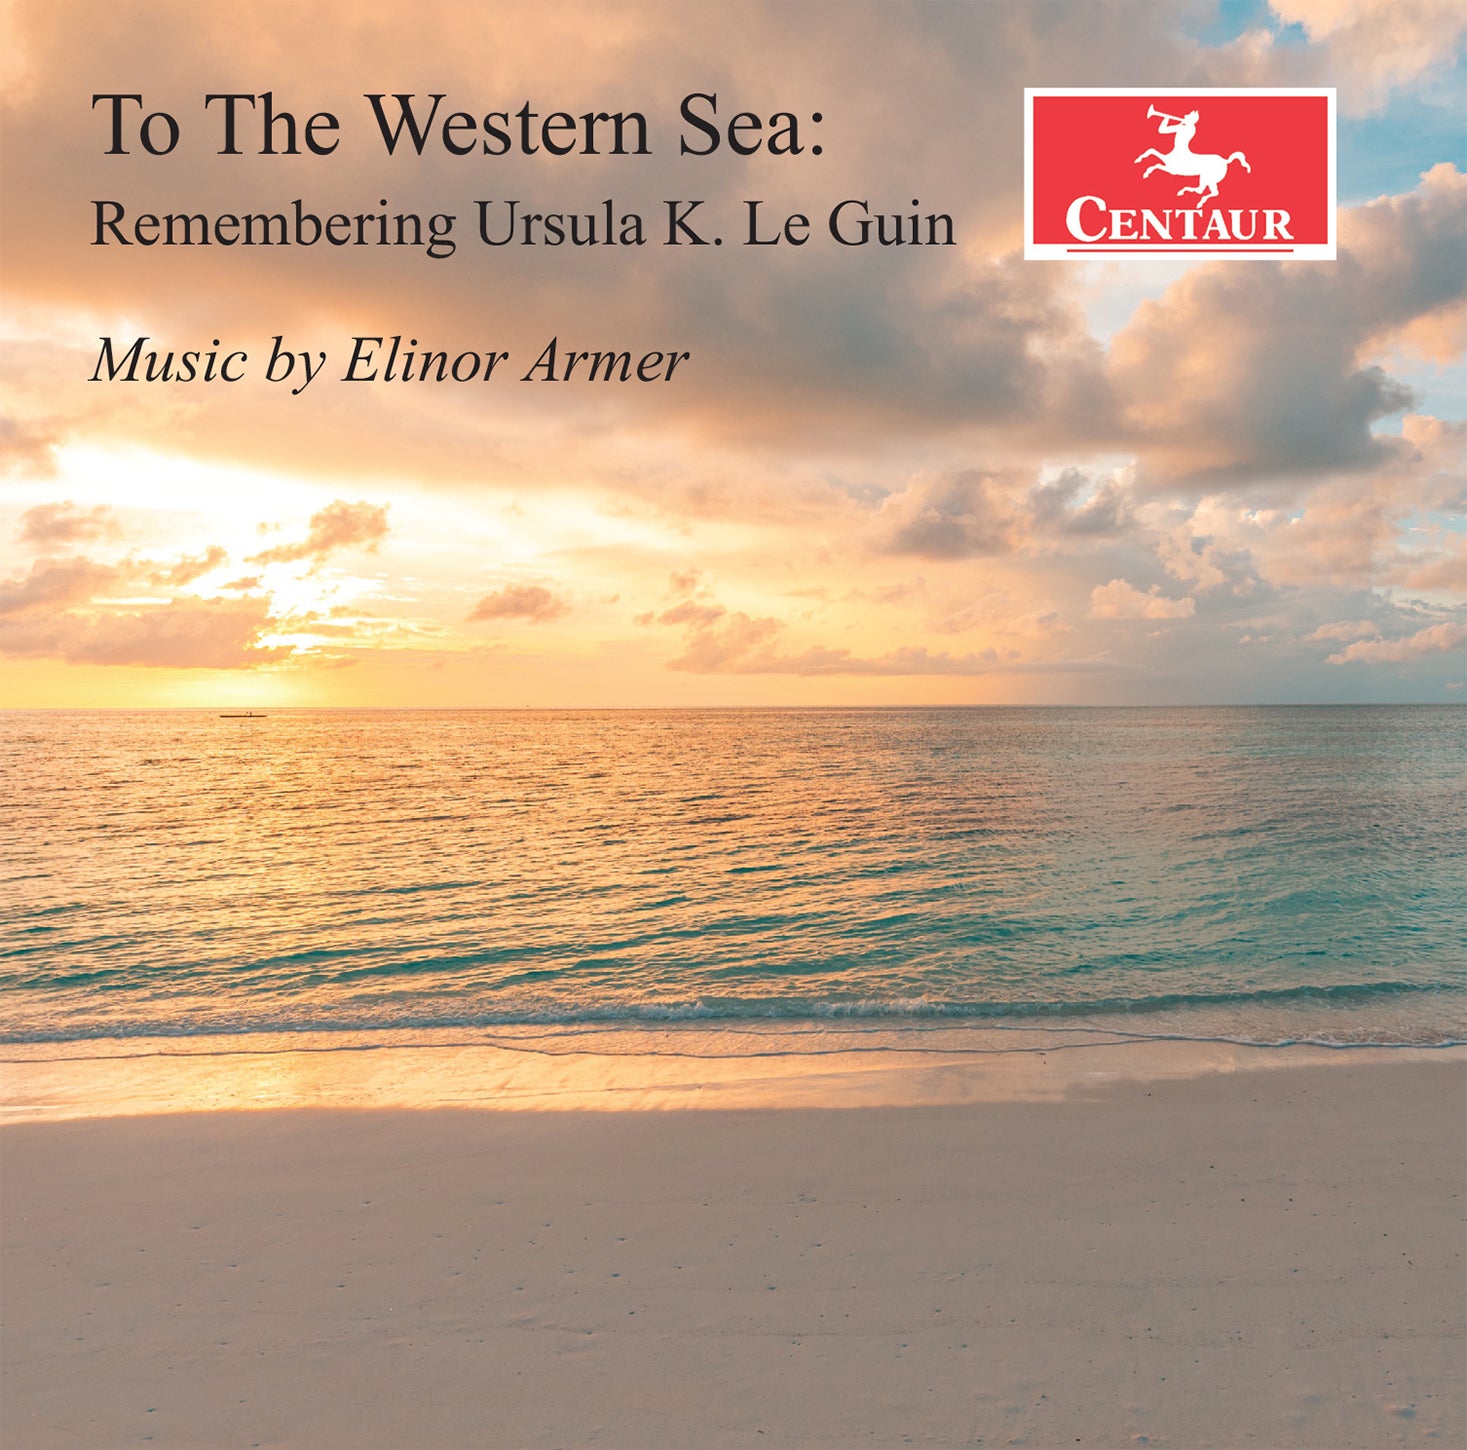 Elinor Armer: To the Western Sea - Remembering Ursula K. Le Guin